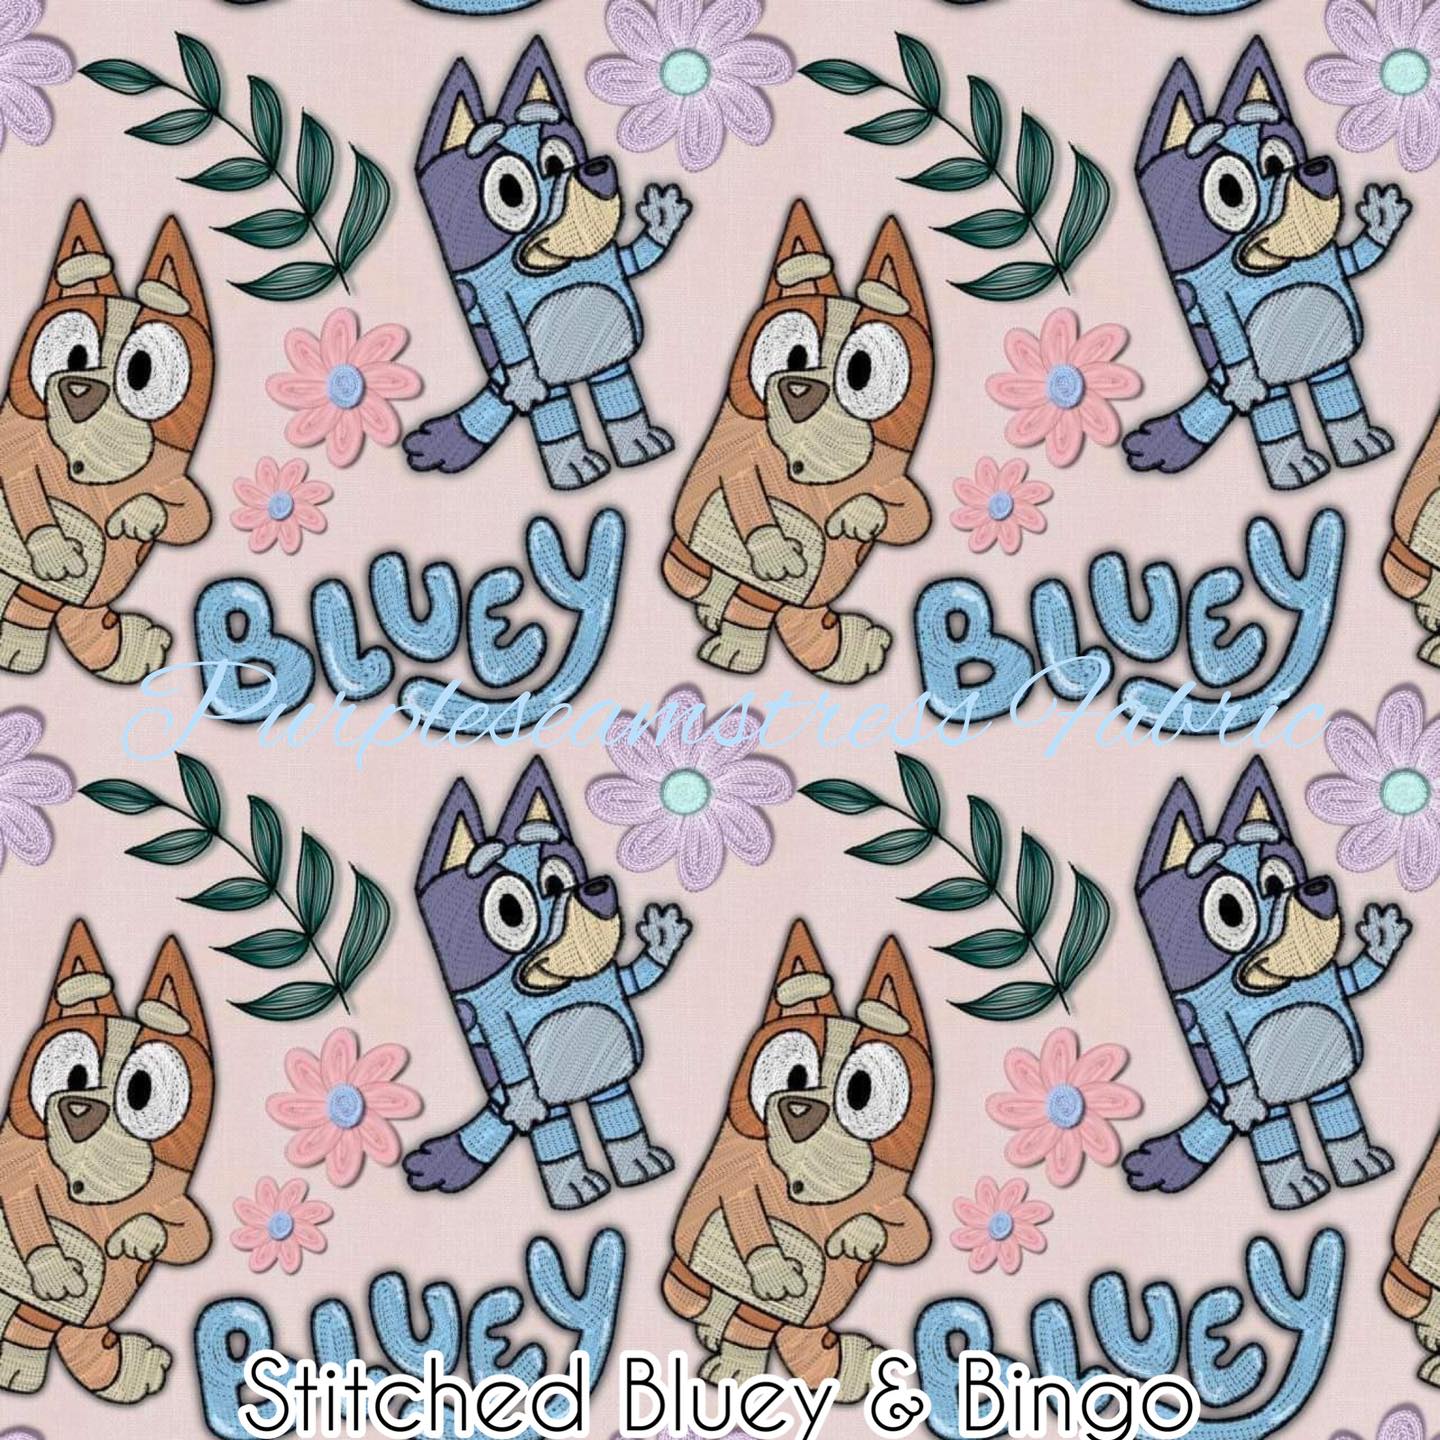 Bluey: All About Bingo